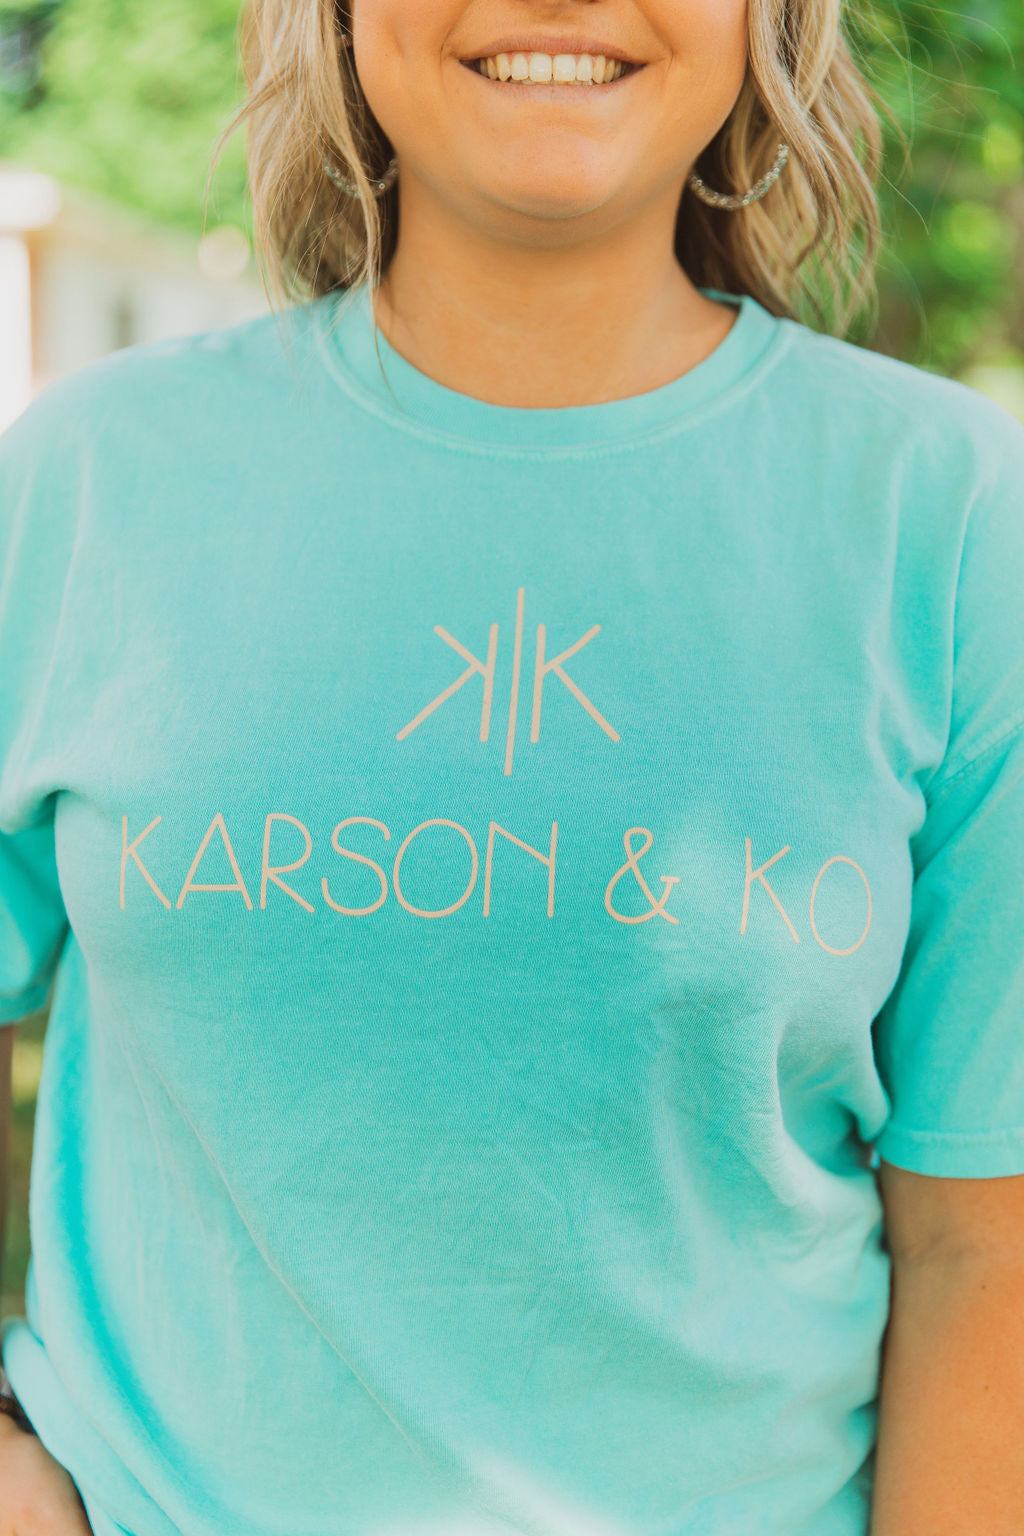 Karson & Ko Graphic Tee